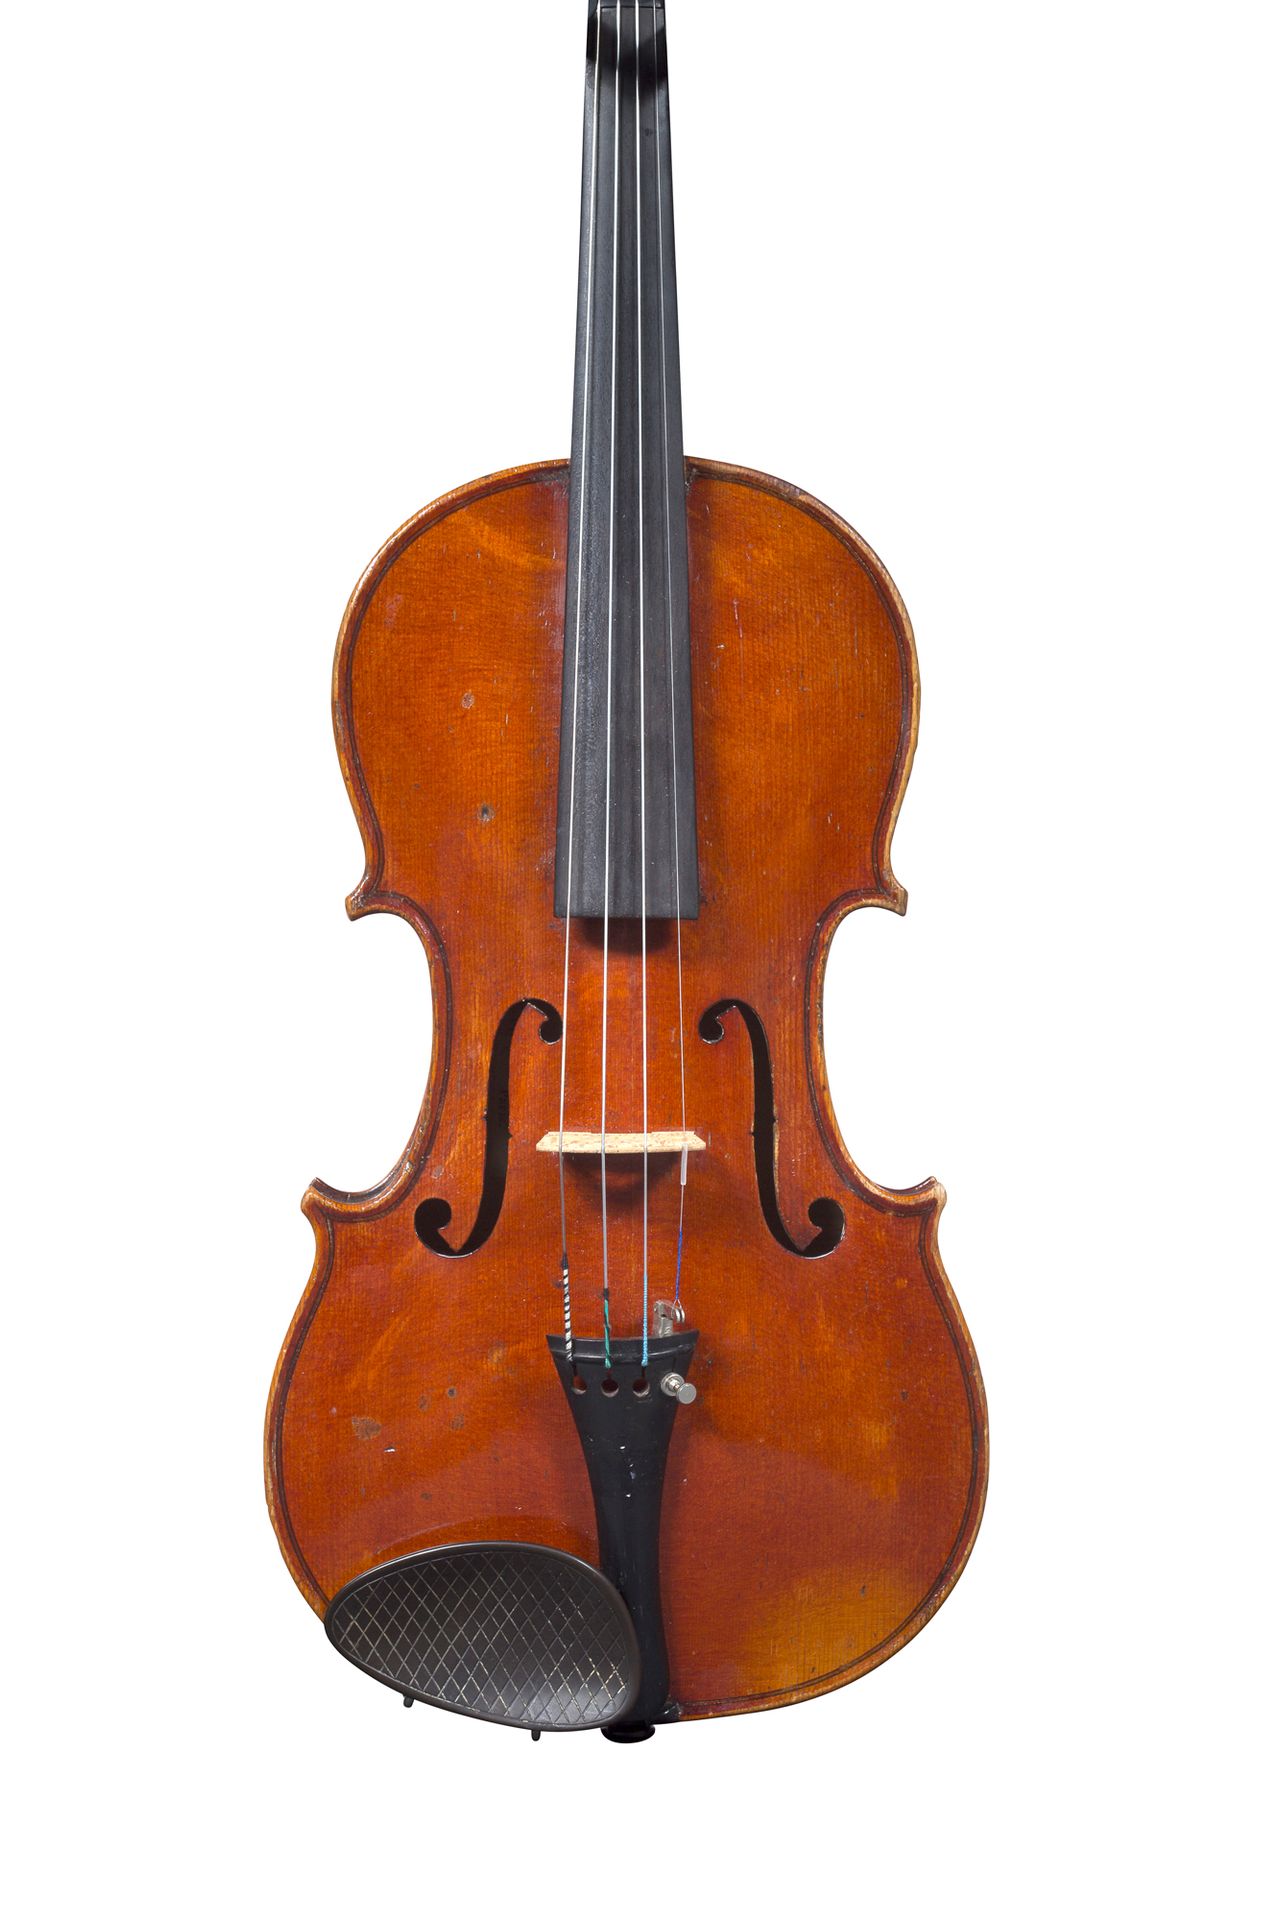 Null 19世纪Mirecourt制造的漂亮小提琴
法国作品
带有巴黎的François Richard的标签
右上方有修复的痕迹
状态良好
随时可以演奏 
&hellip;